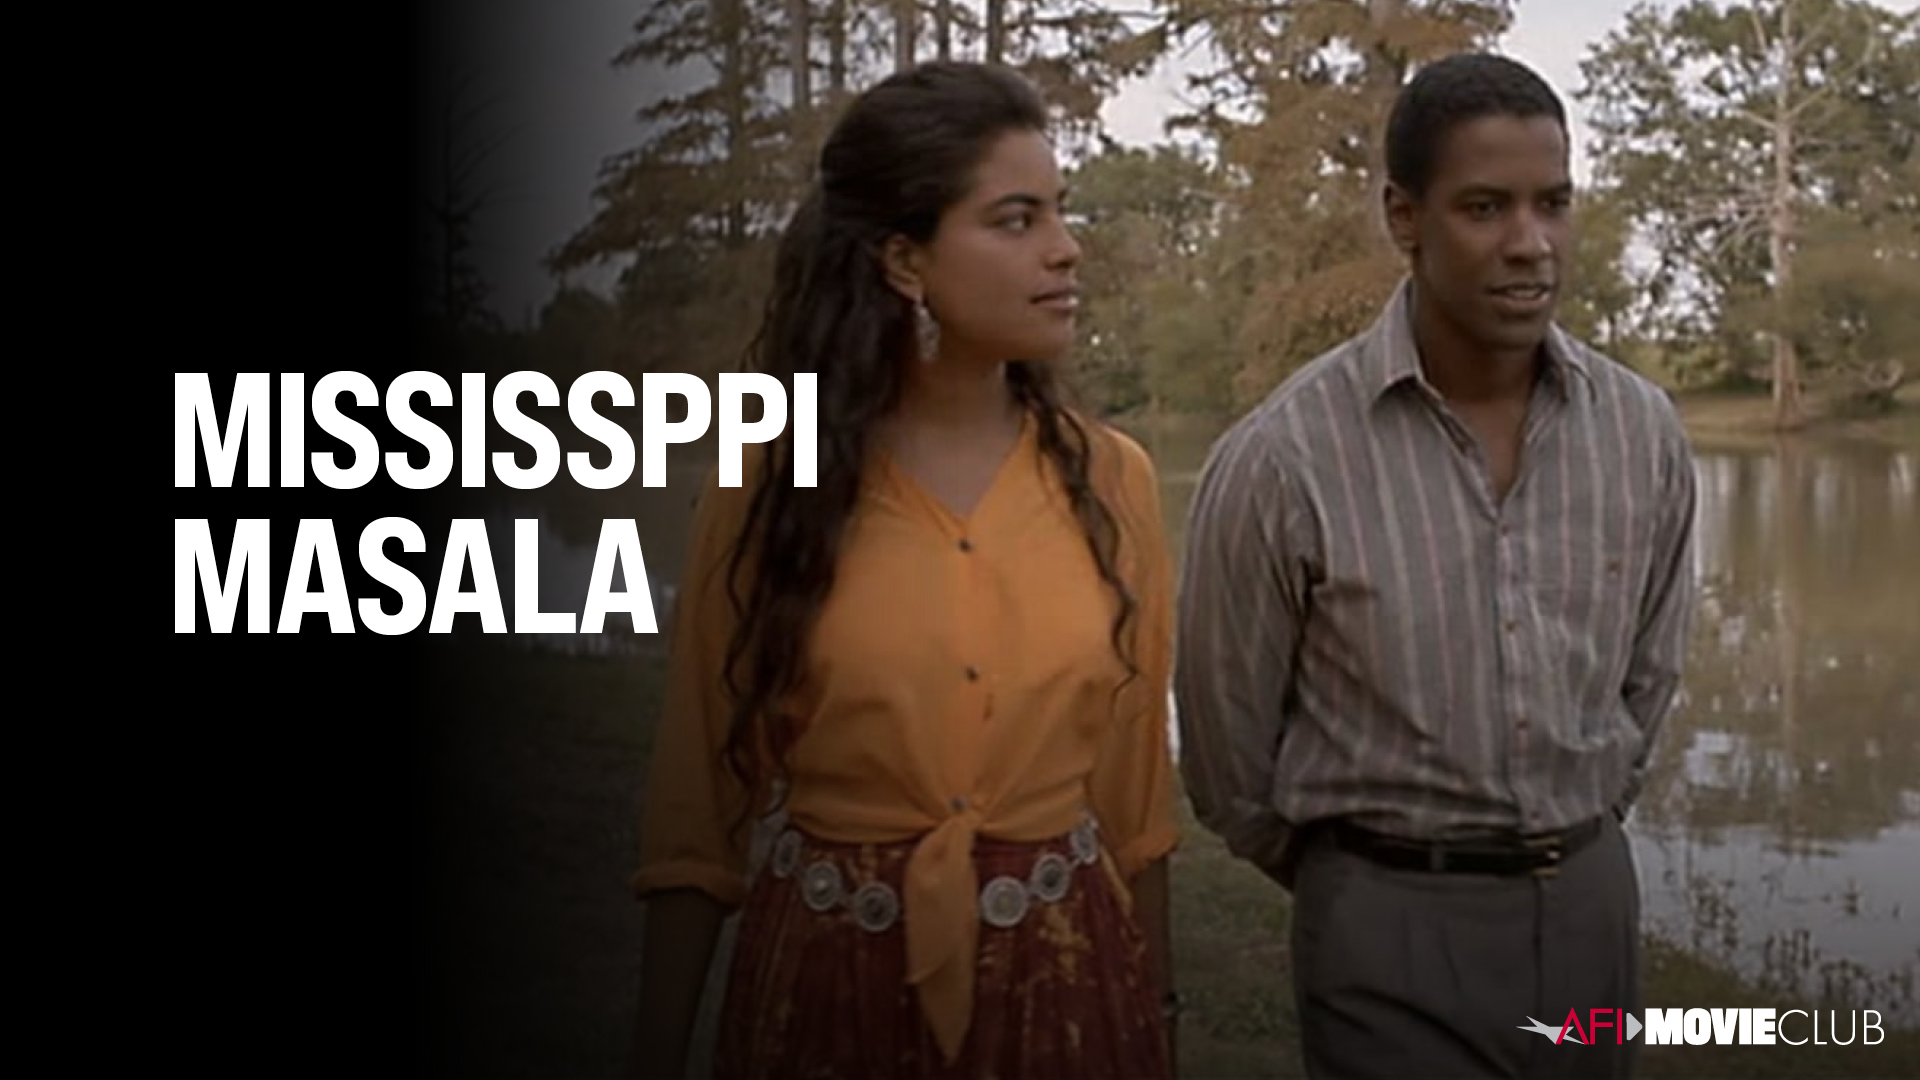 Mississippi Masala Film Still - Denzel Washington and Sarita Choudhury